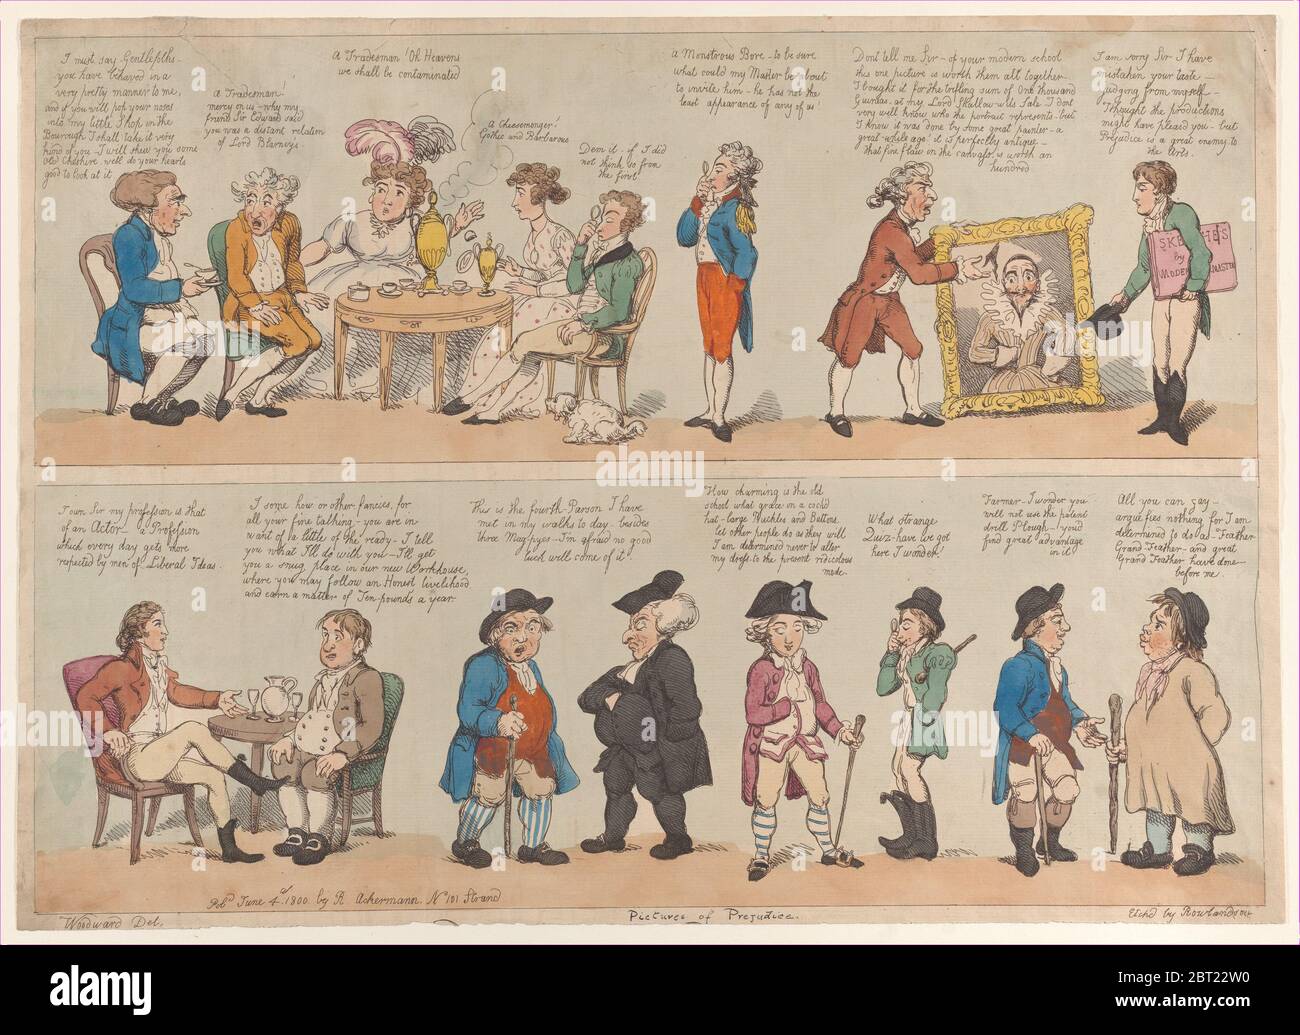 Pictures of Prejudice, June 4, 1800. Stock Photo